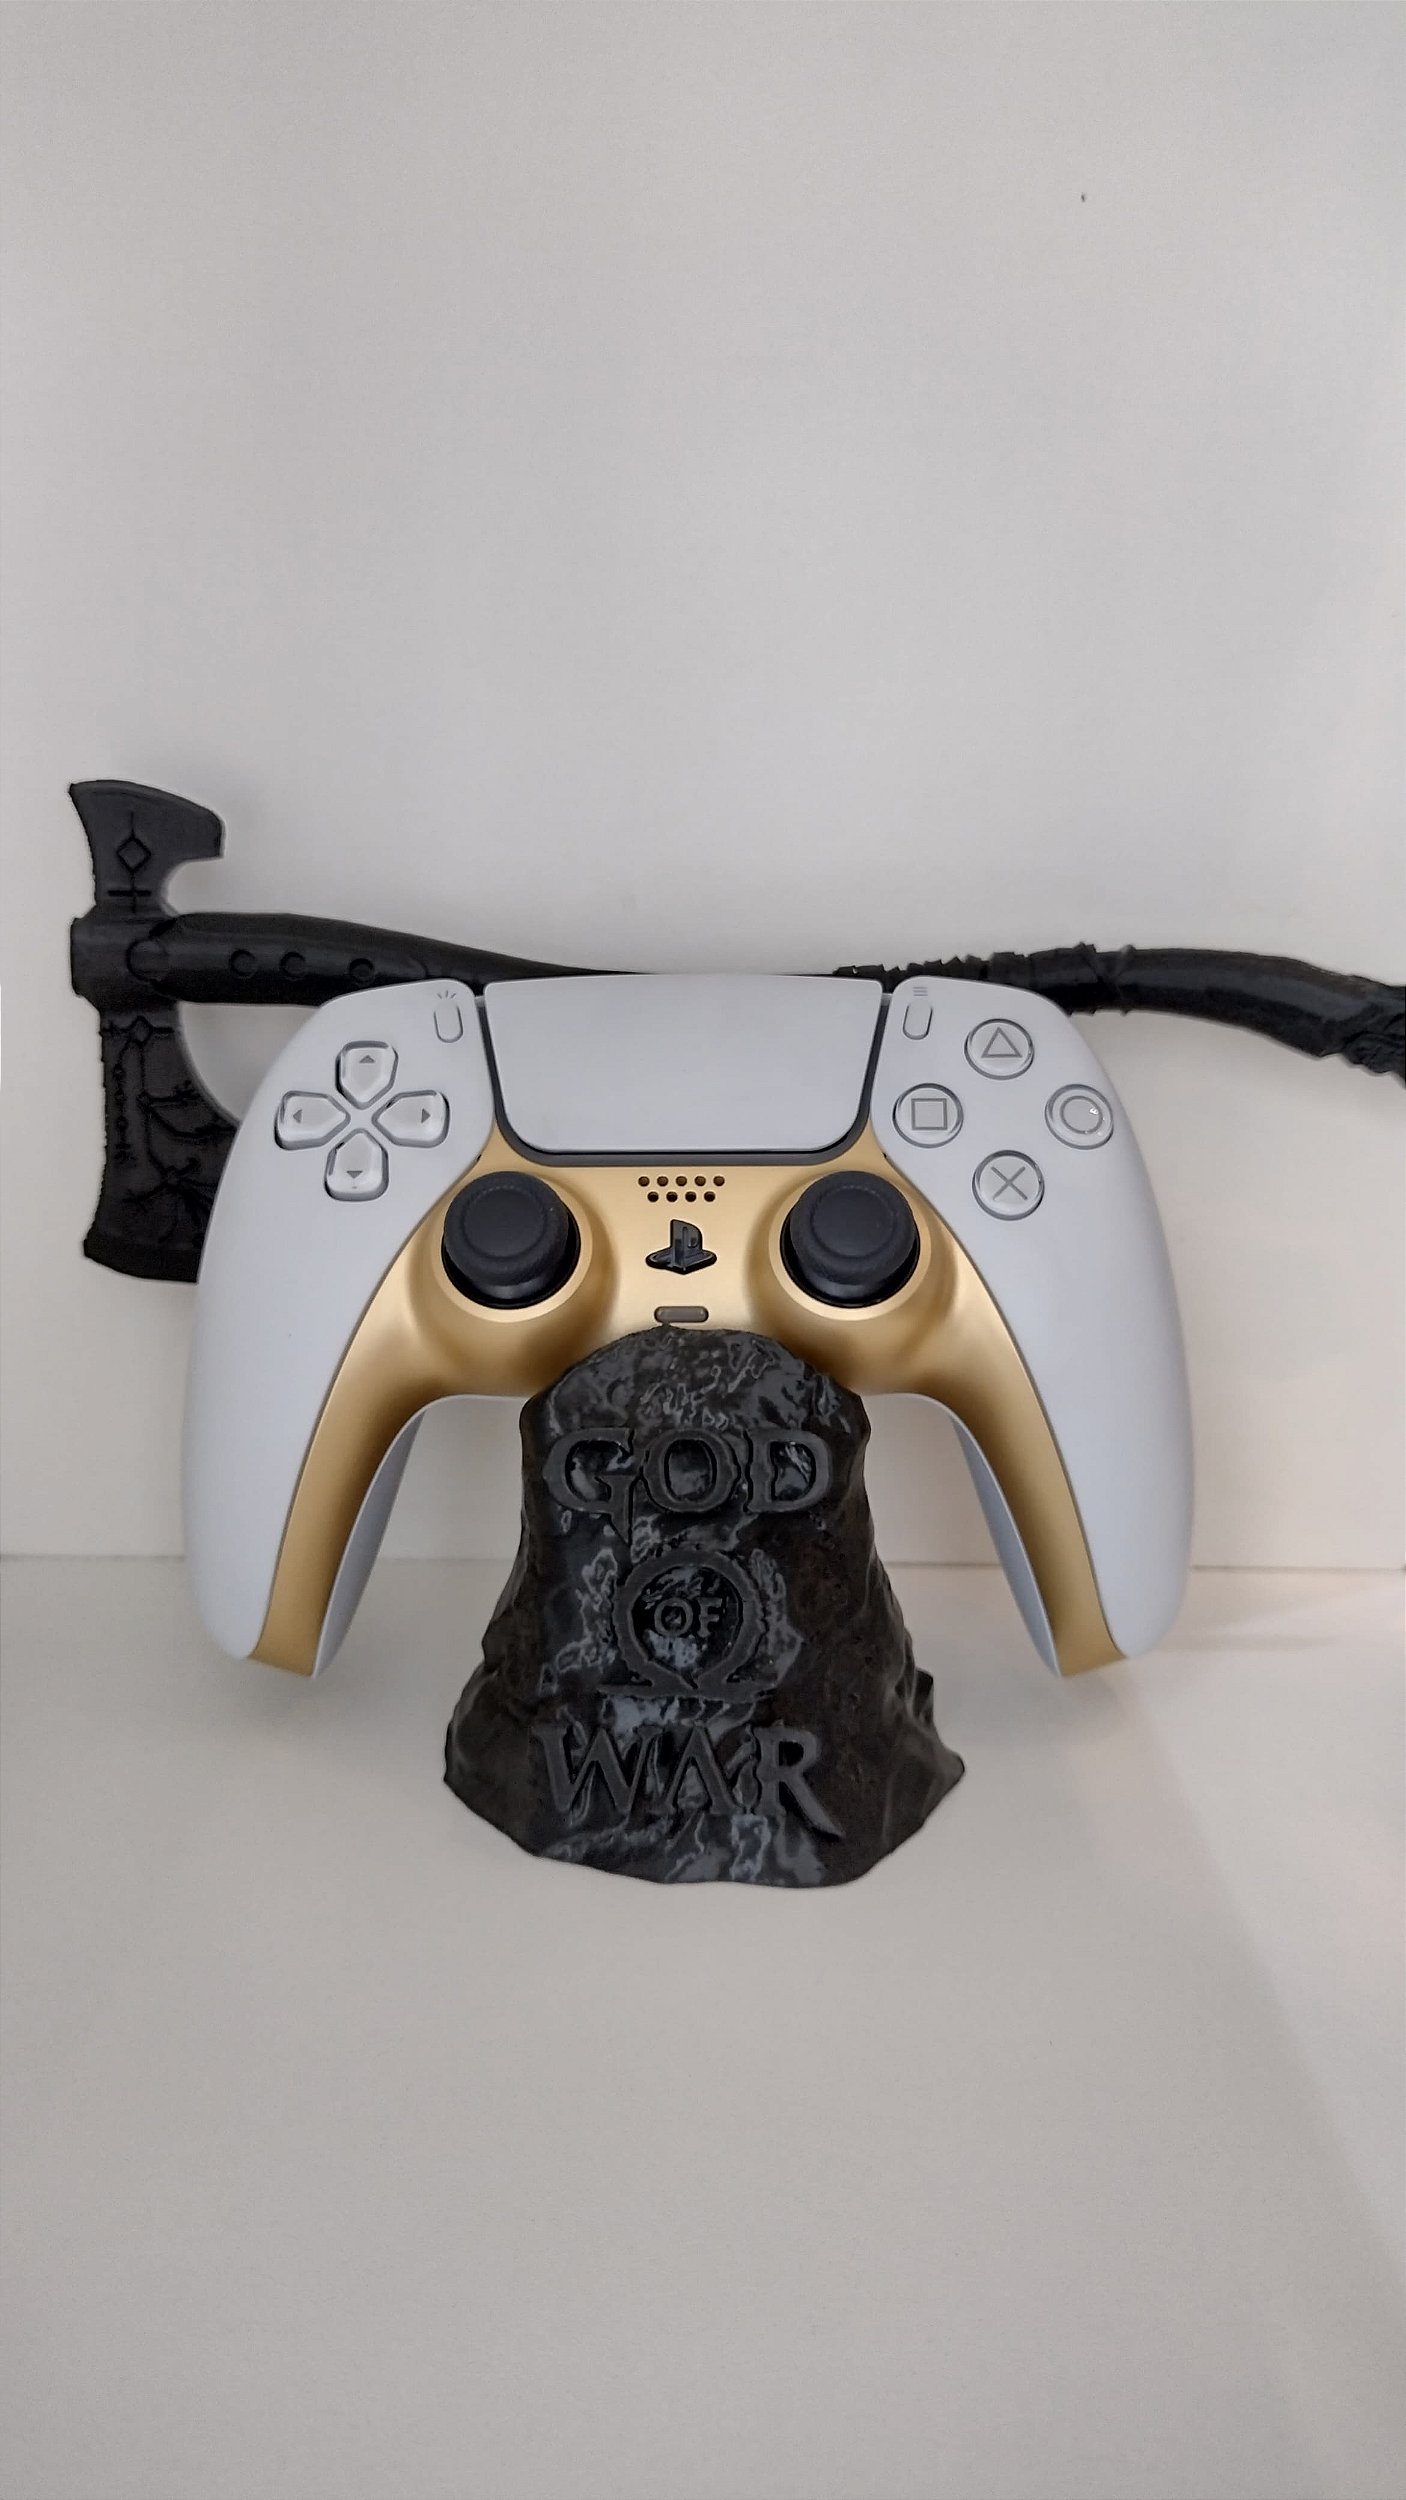 Suporte para Controles de PS4 e PS5 - Personalizado God of War Cinza